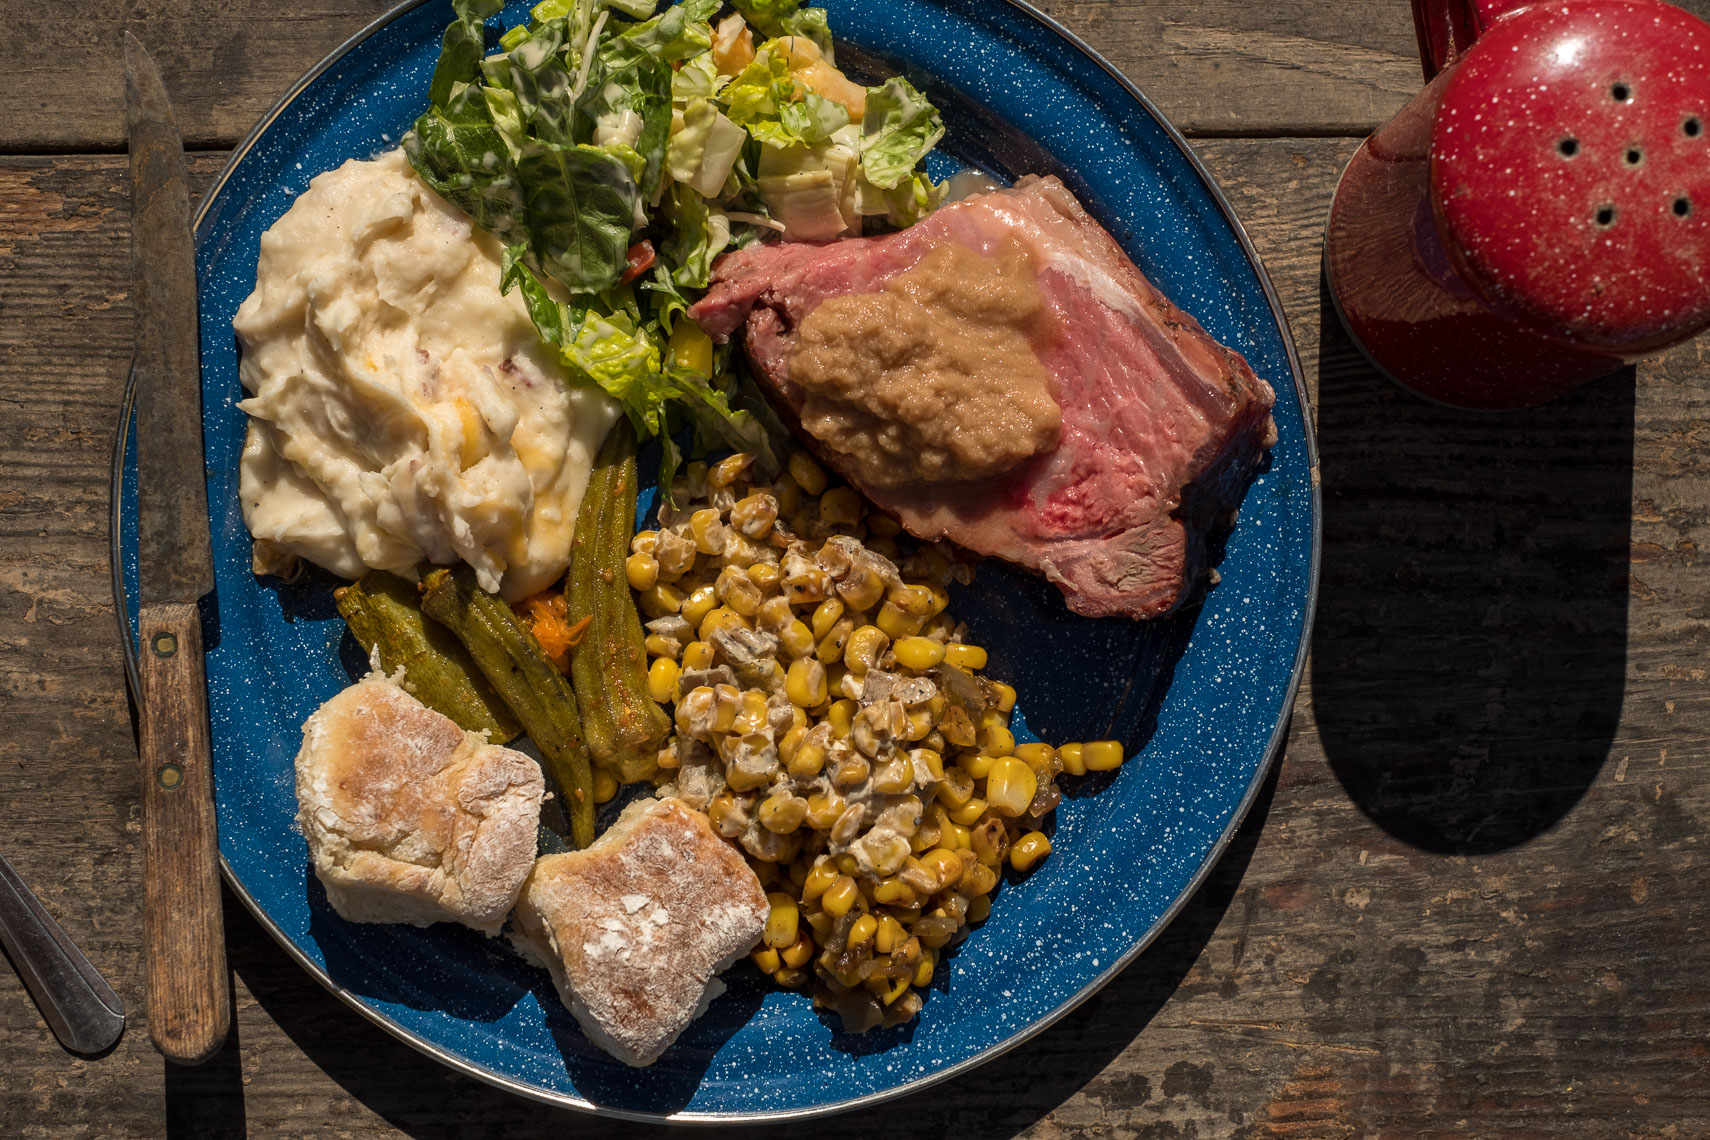 Chuck-Wagon-Food-Cooking-South-Texas-Ranch-Jason-Risner-Photographt-1771